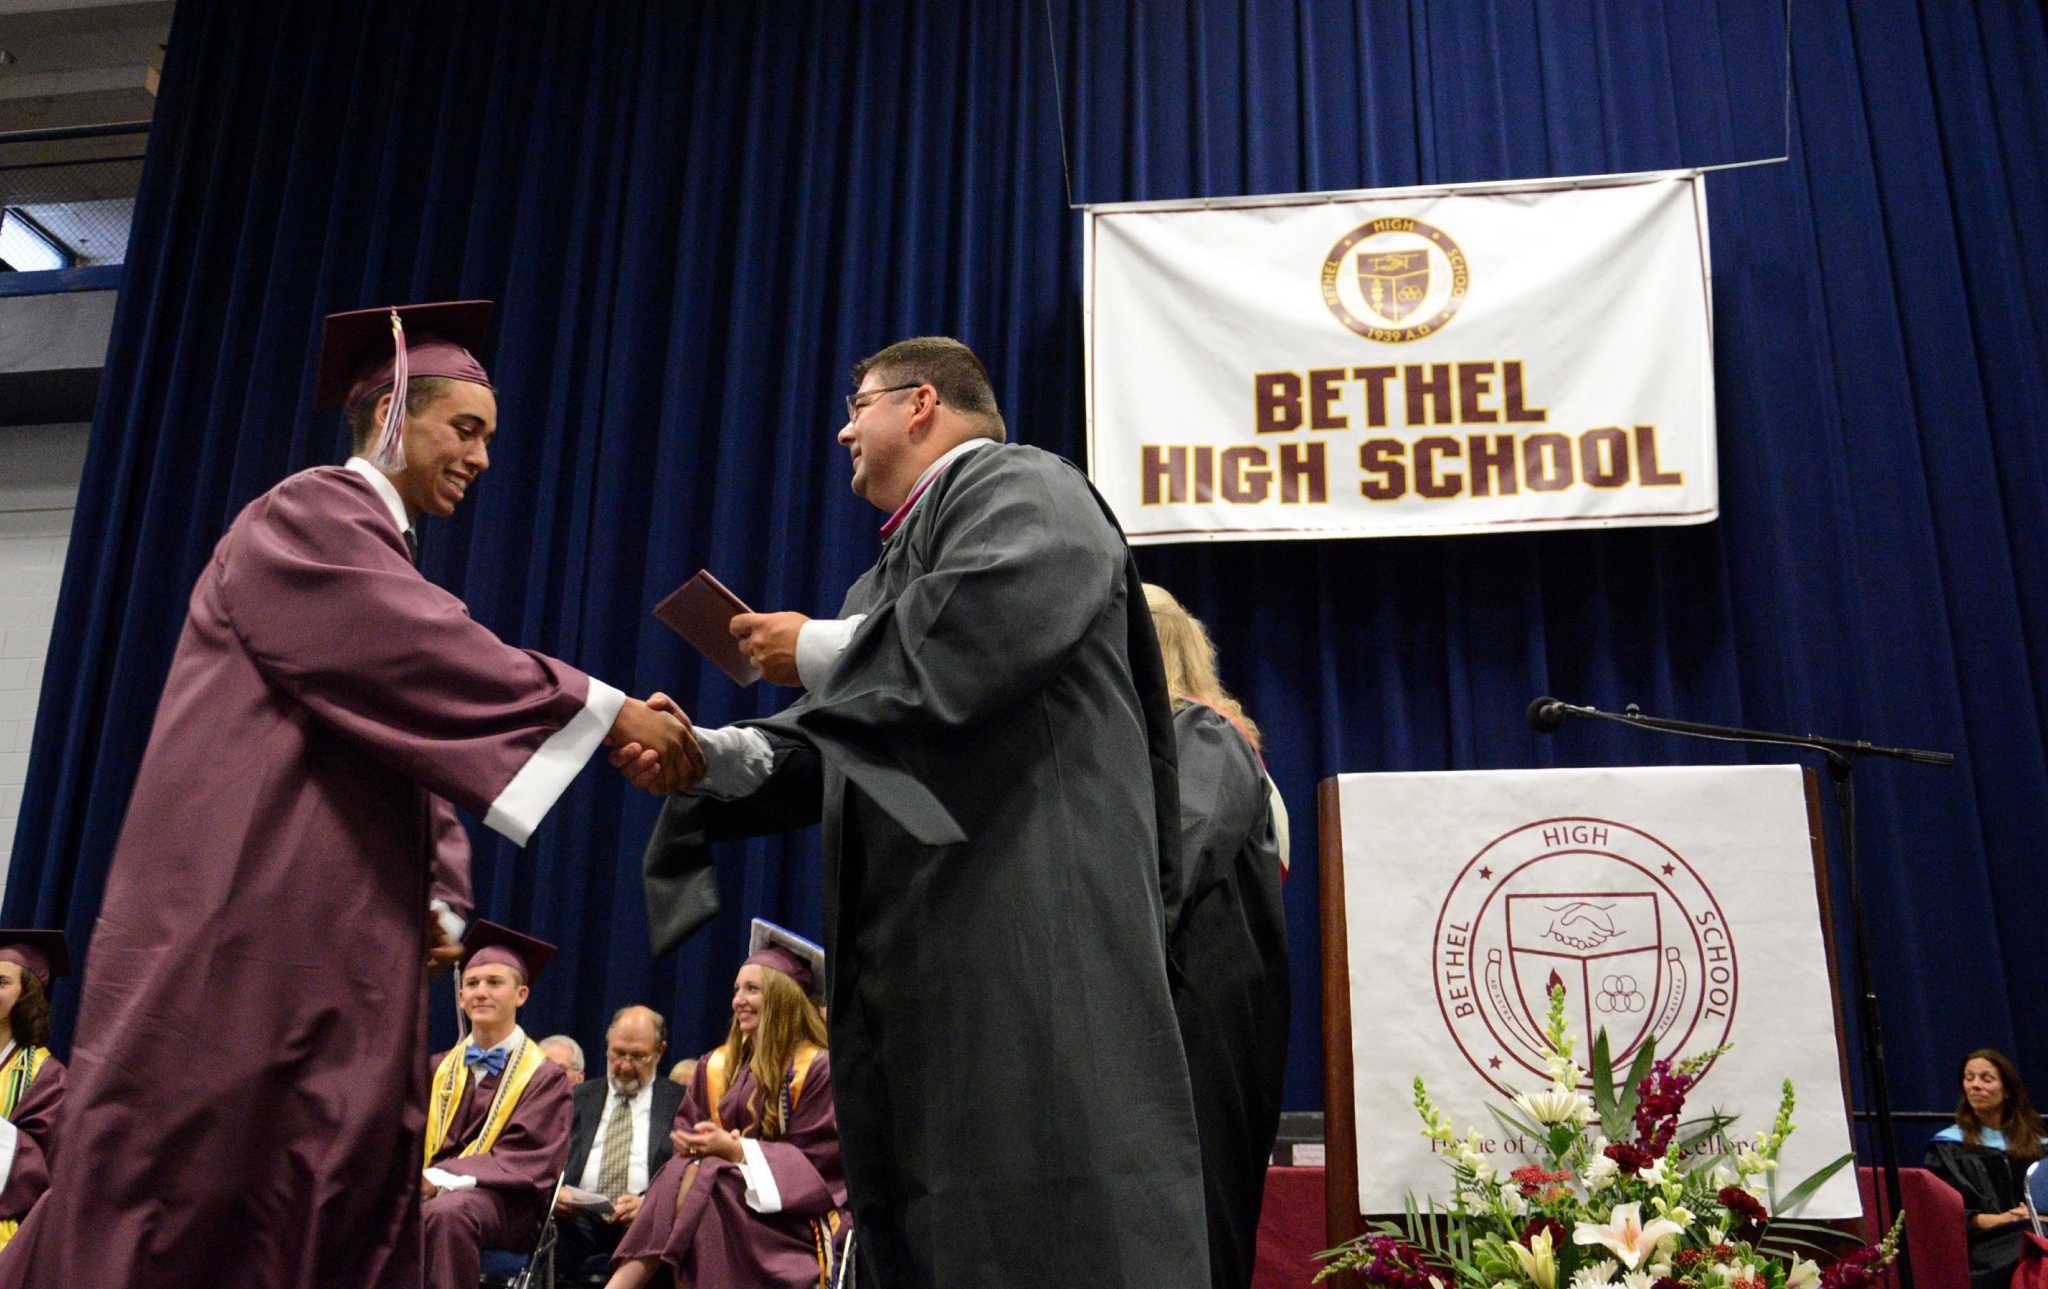 Bethel High School graduation